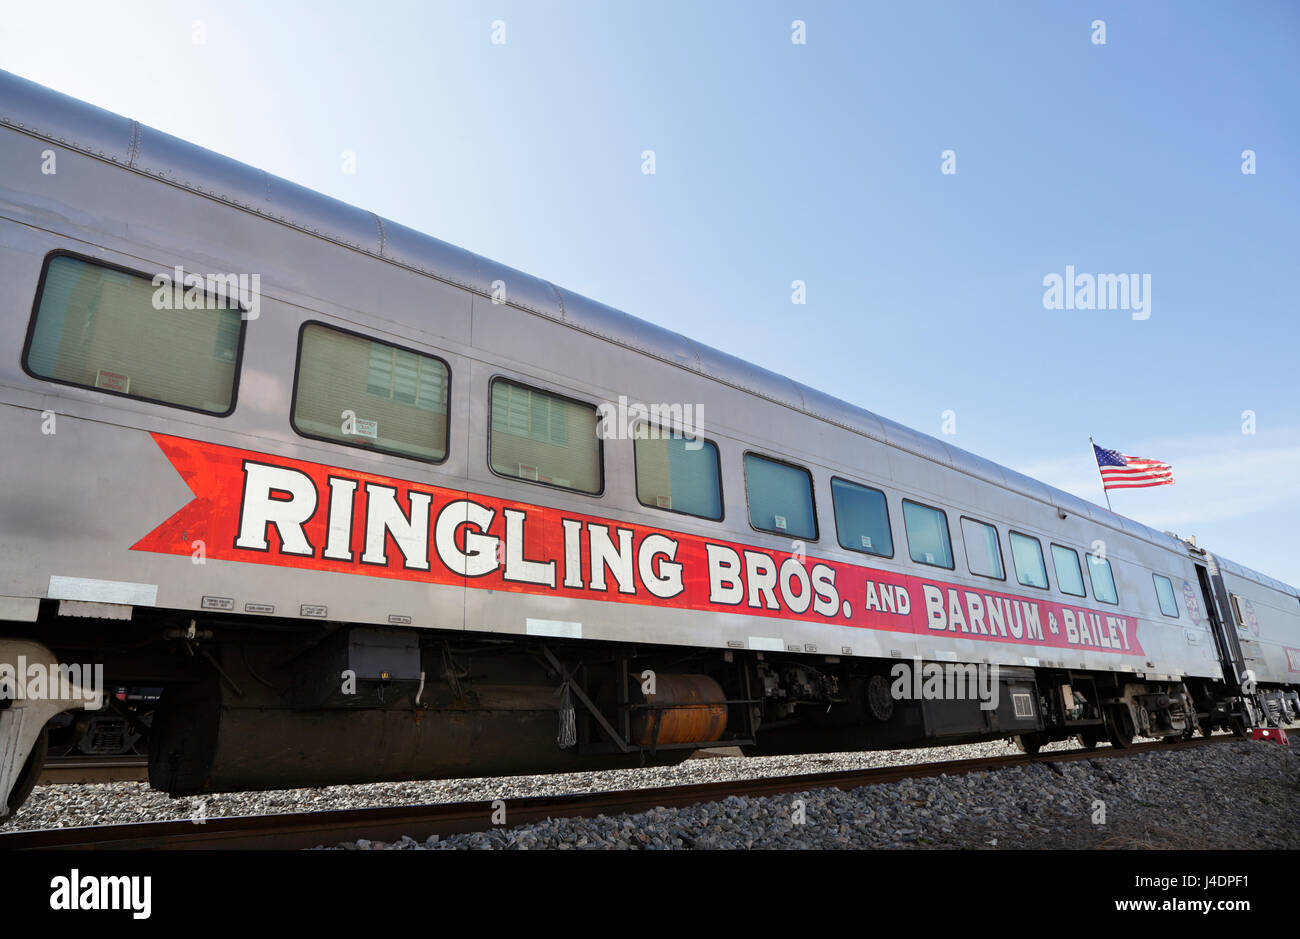 Ringling Bros and Barnum & Bailey circus train, North Carolina, États-Unis Banque D'Images